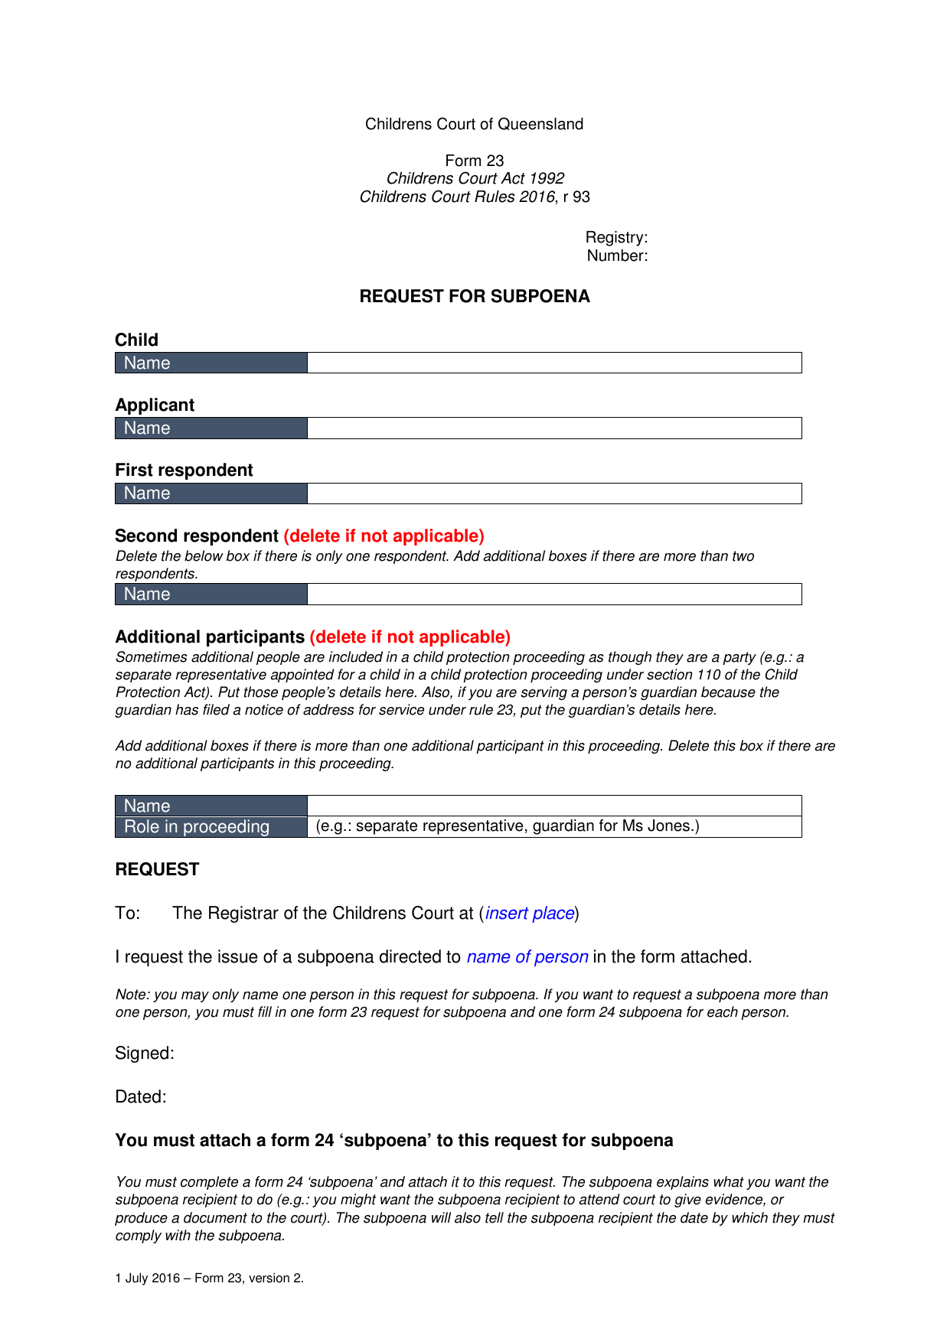 Form 23 Request for Subpoena - Queensland, Australia, Page 1